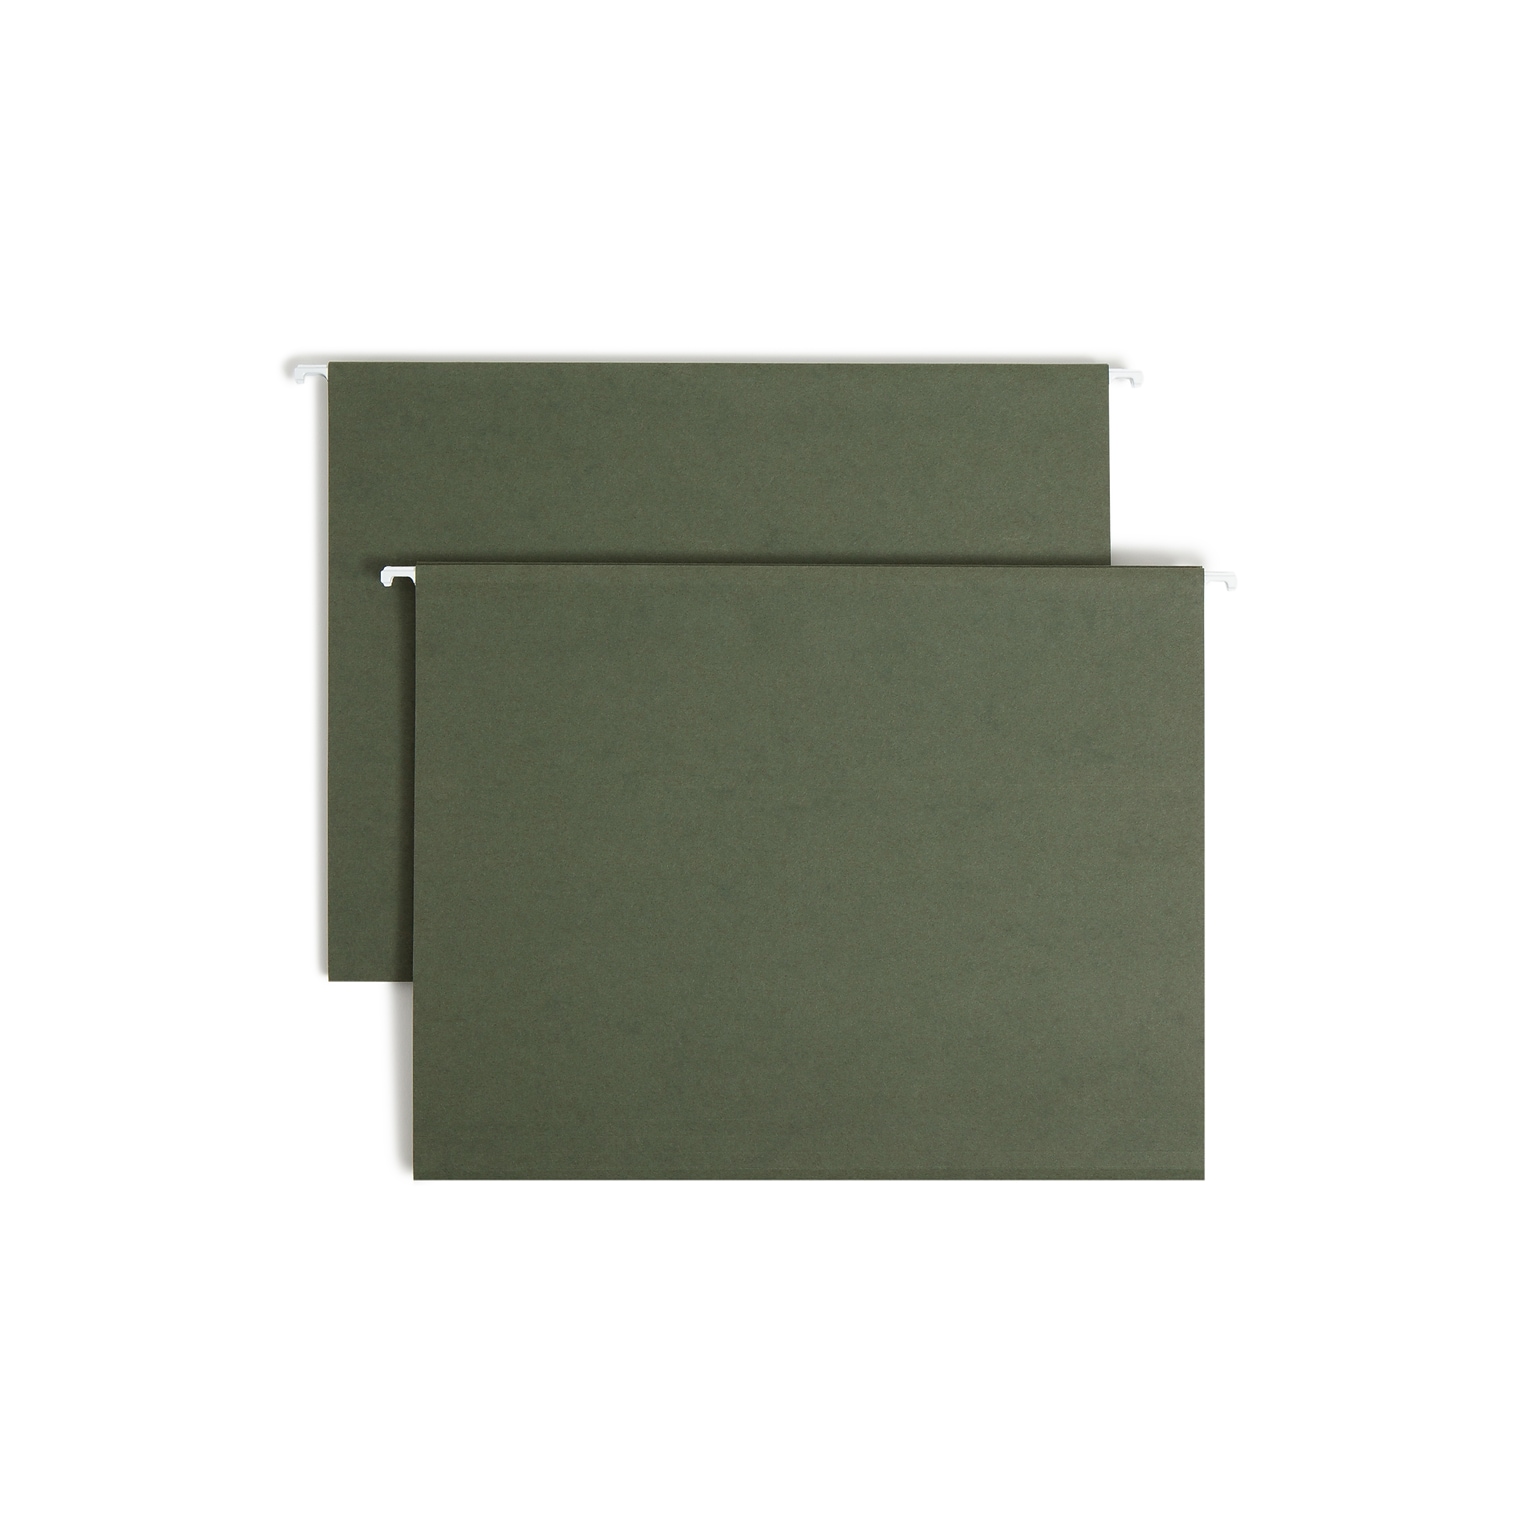 Smead Hanging File Folders, Letter Size, Standard Green, 25/Box (64010)